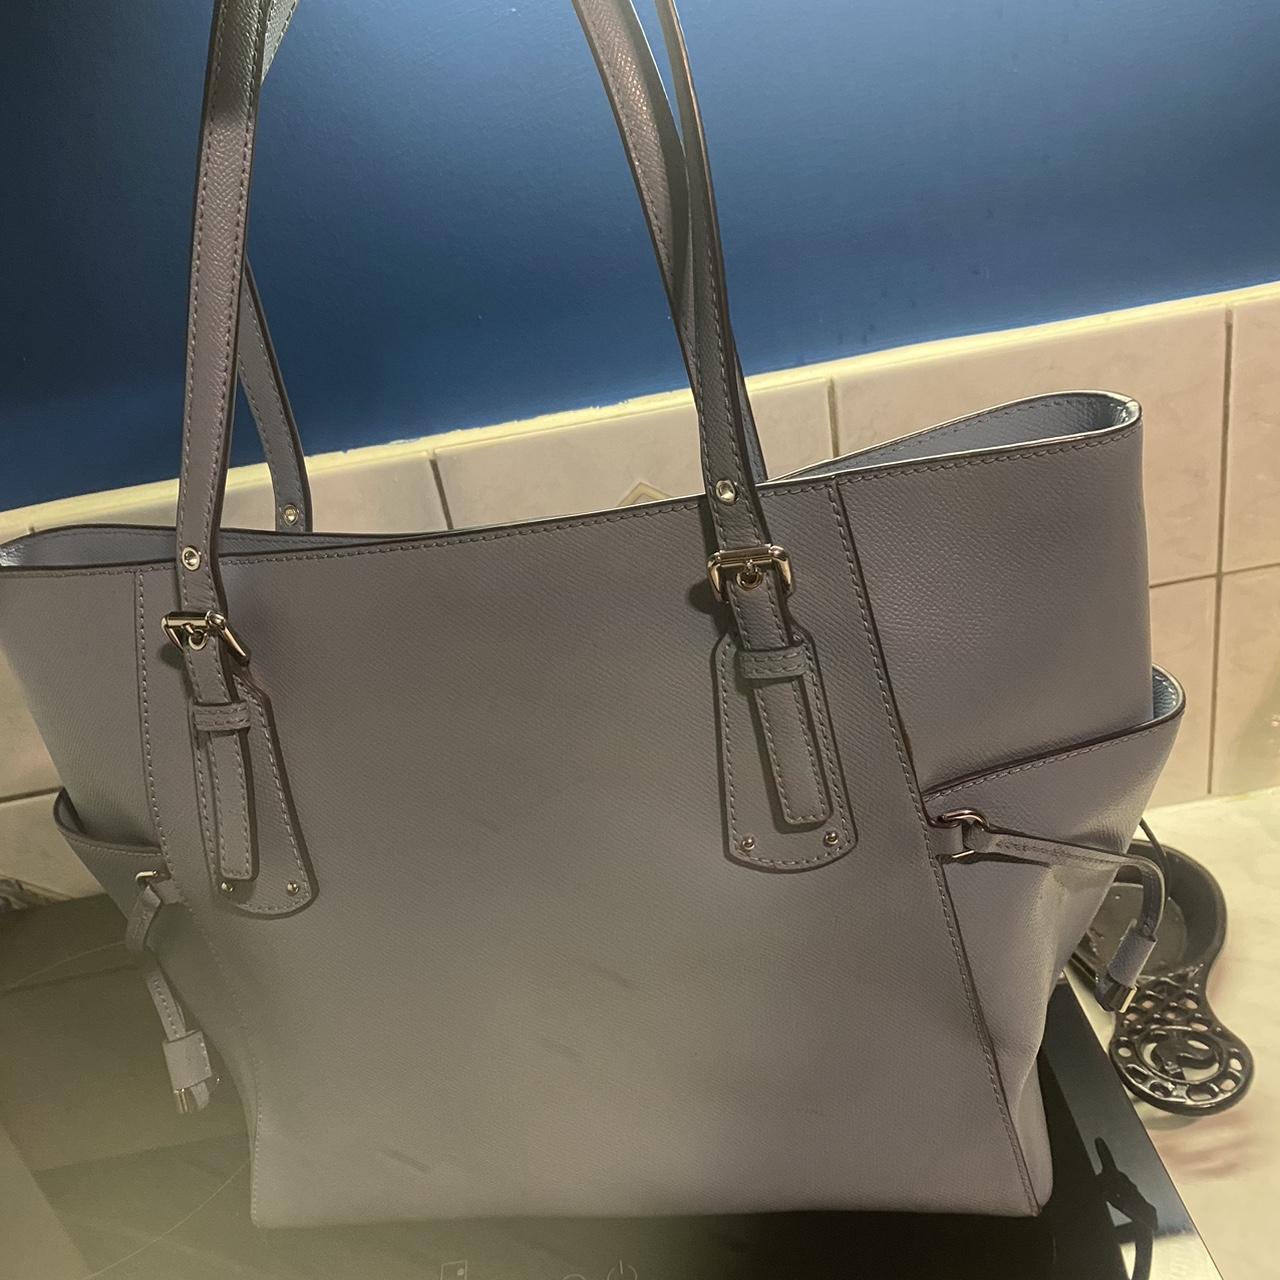 Michael Kors blue light tote bag purse | Purses and bags, Tote bag purse,  Purses